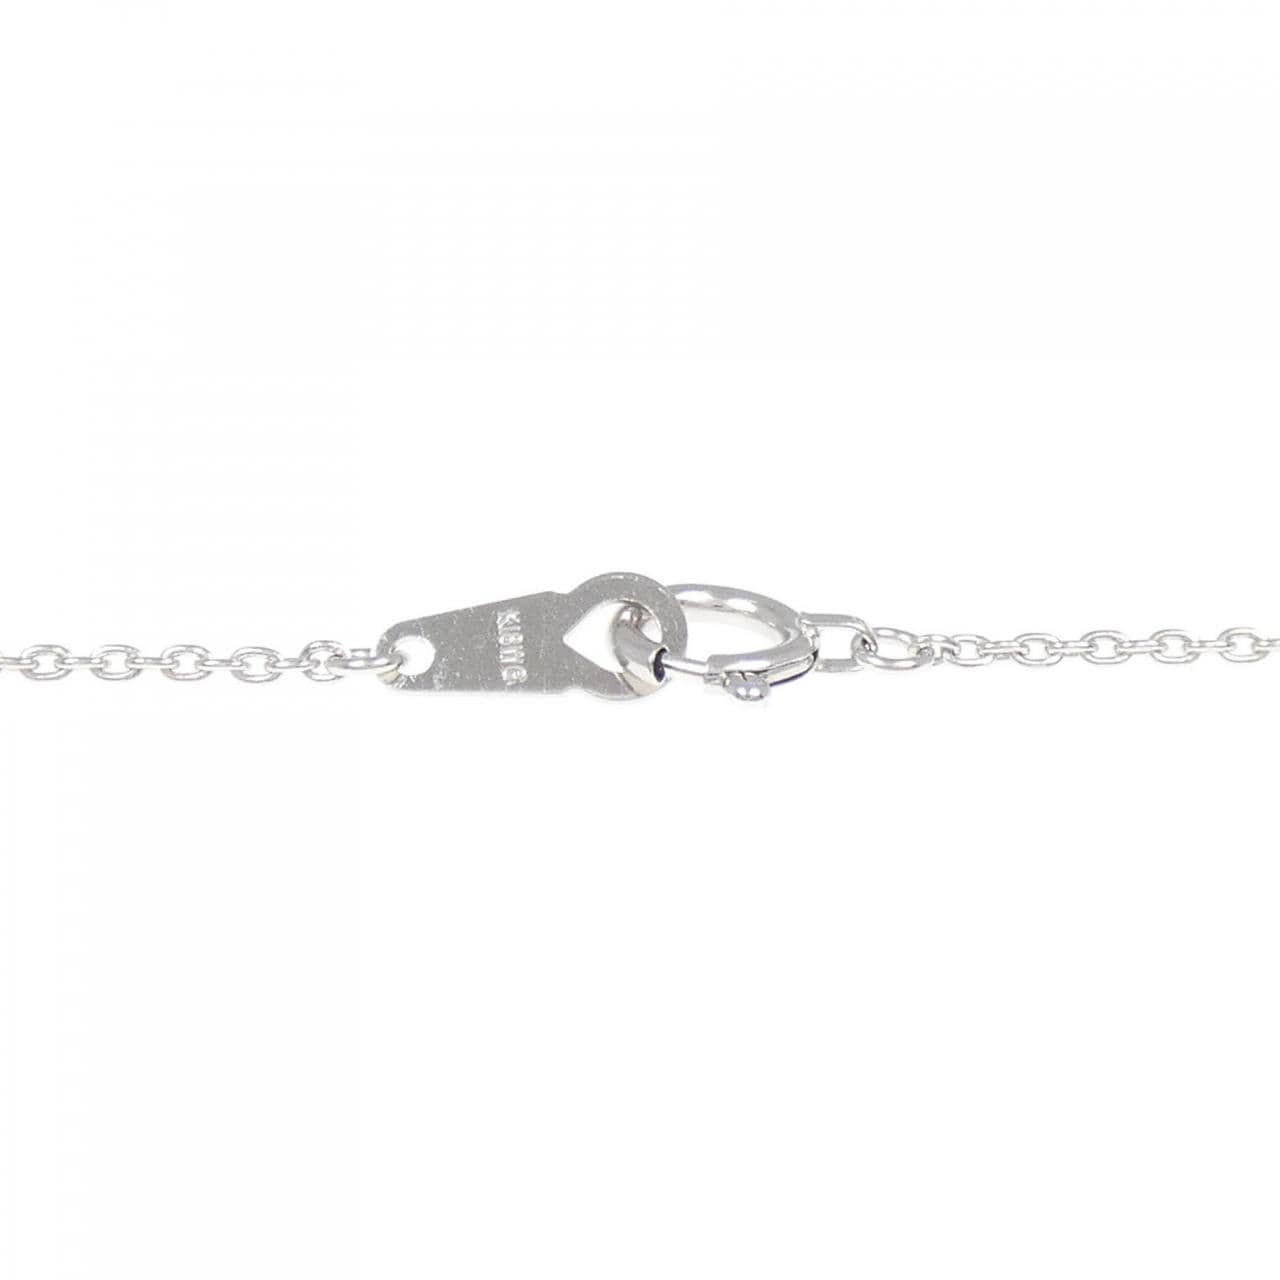 PT/K18WG Star Diamond Necklace 0.05CT